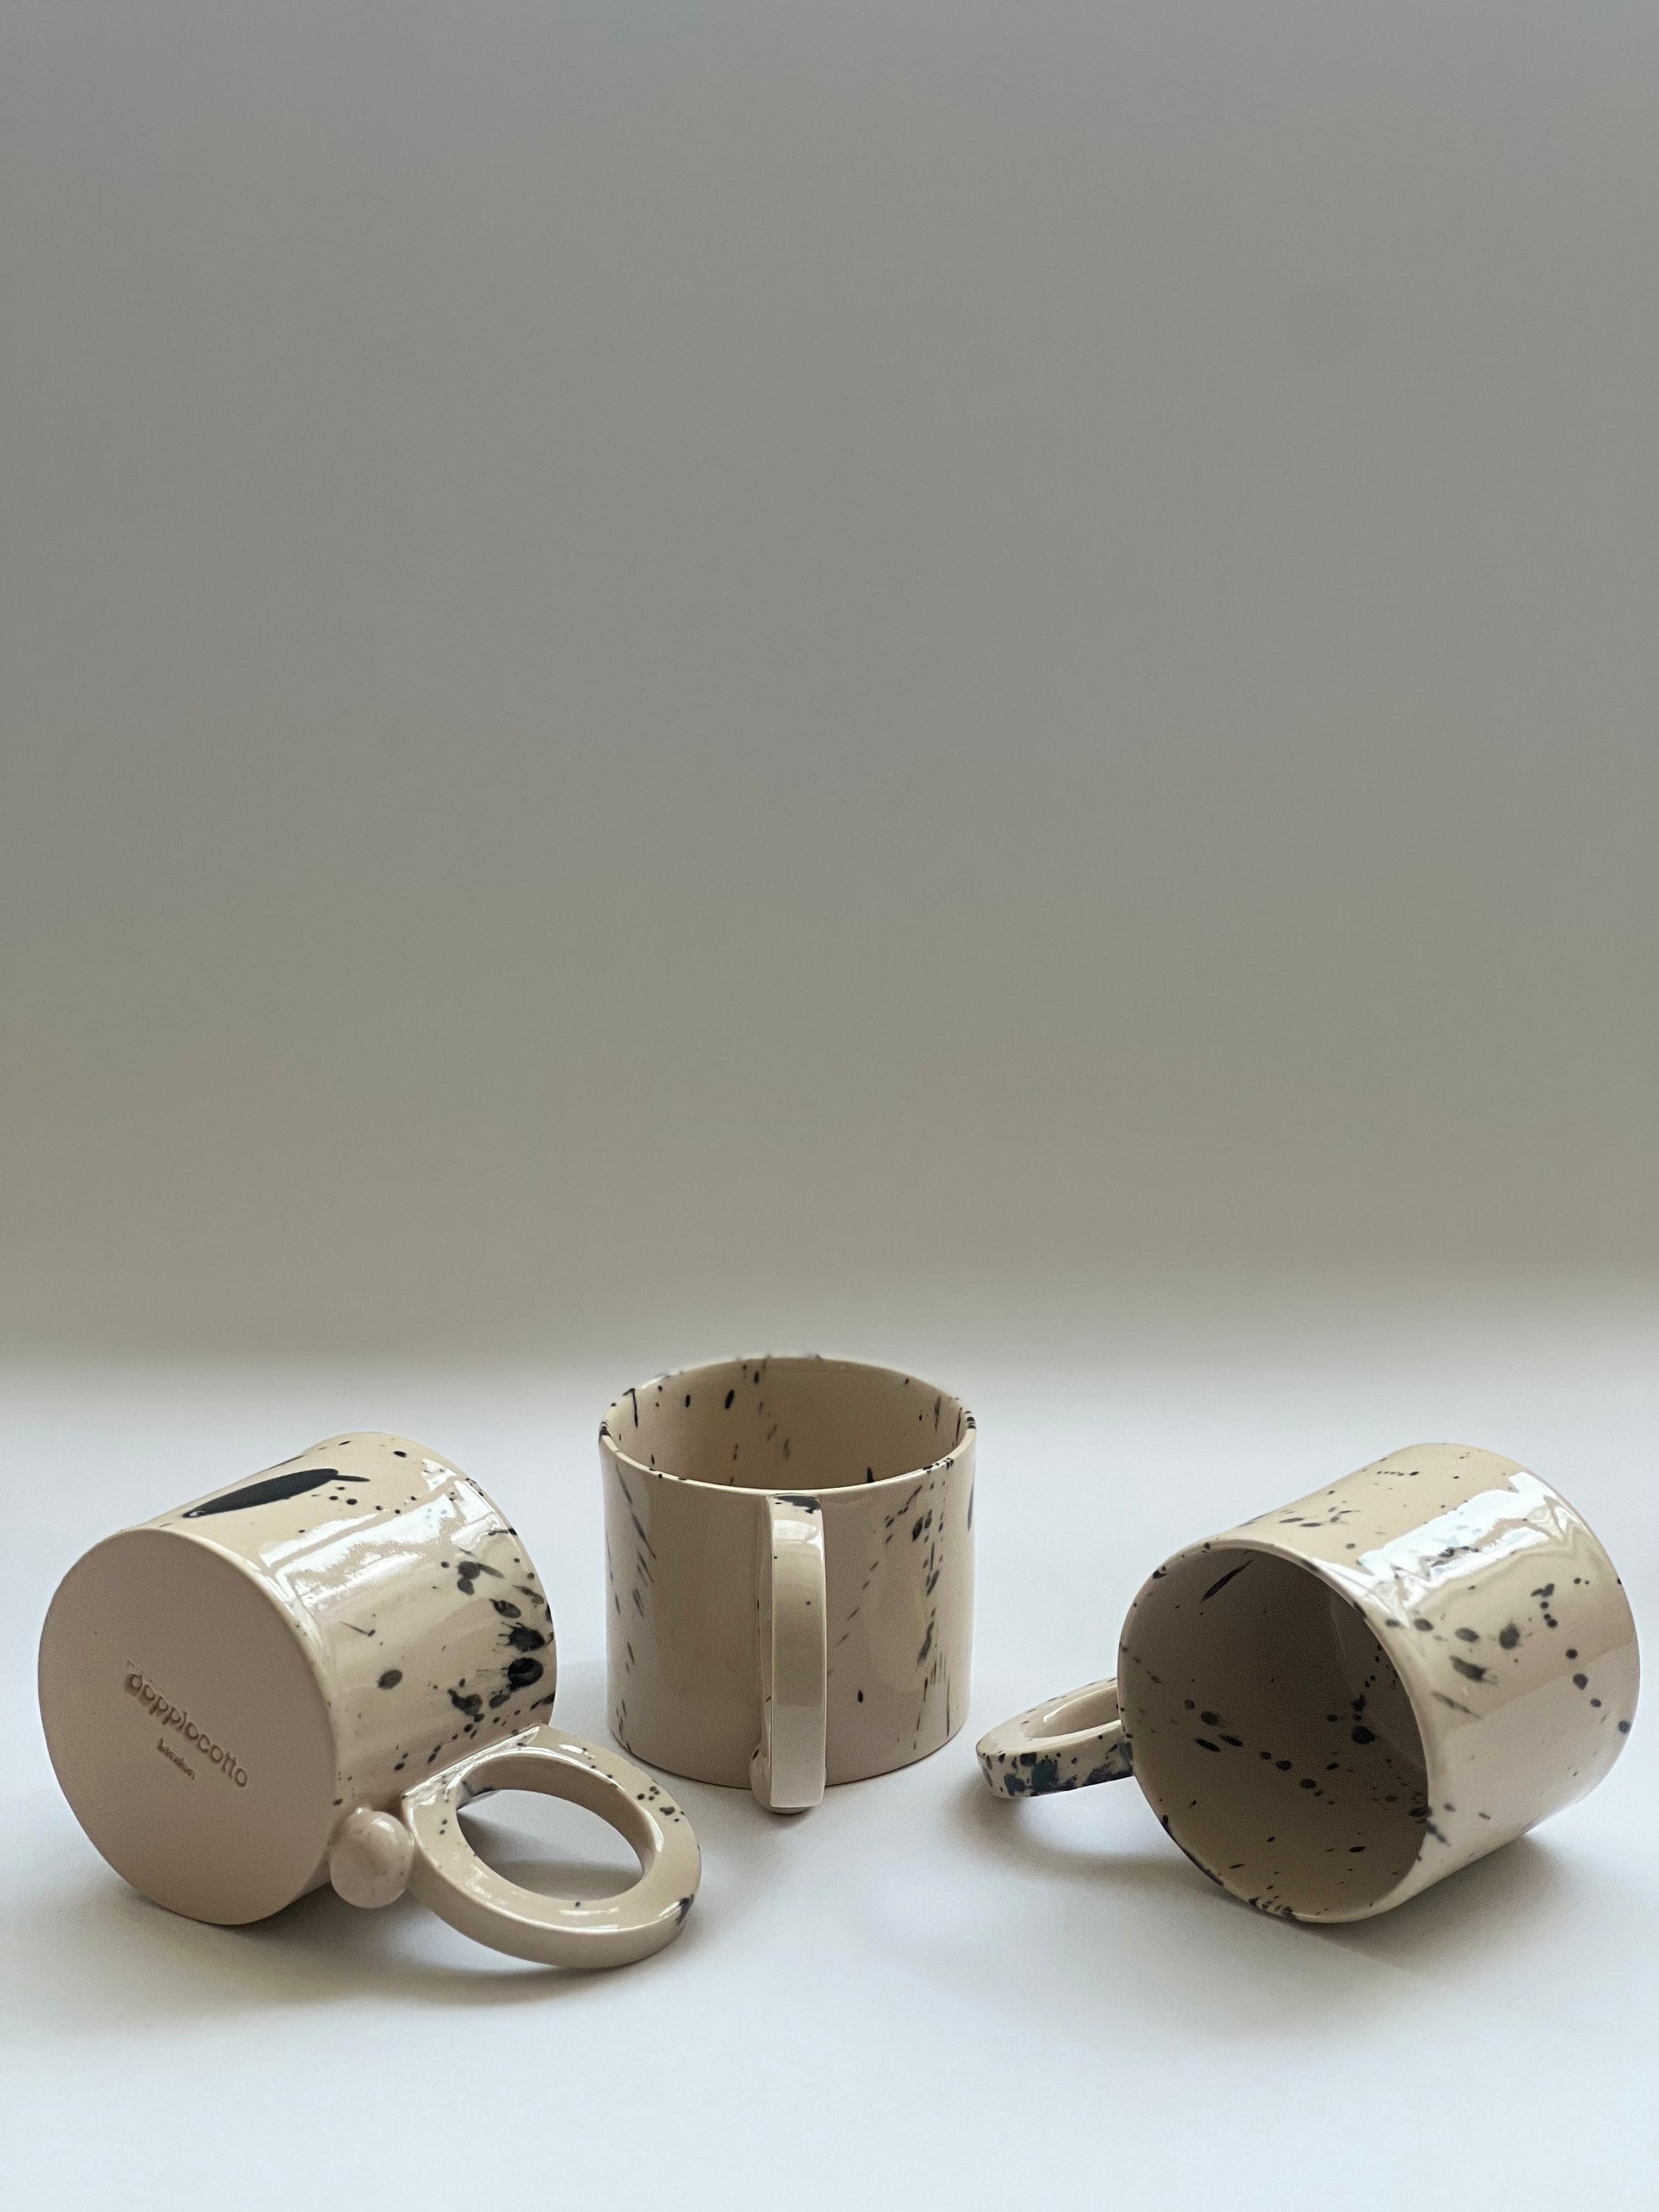 Acopa 8.5 oz. Brown Speckle Narrow Rim Stoneware Coffee Cup / Mug - 36/Case